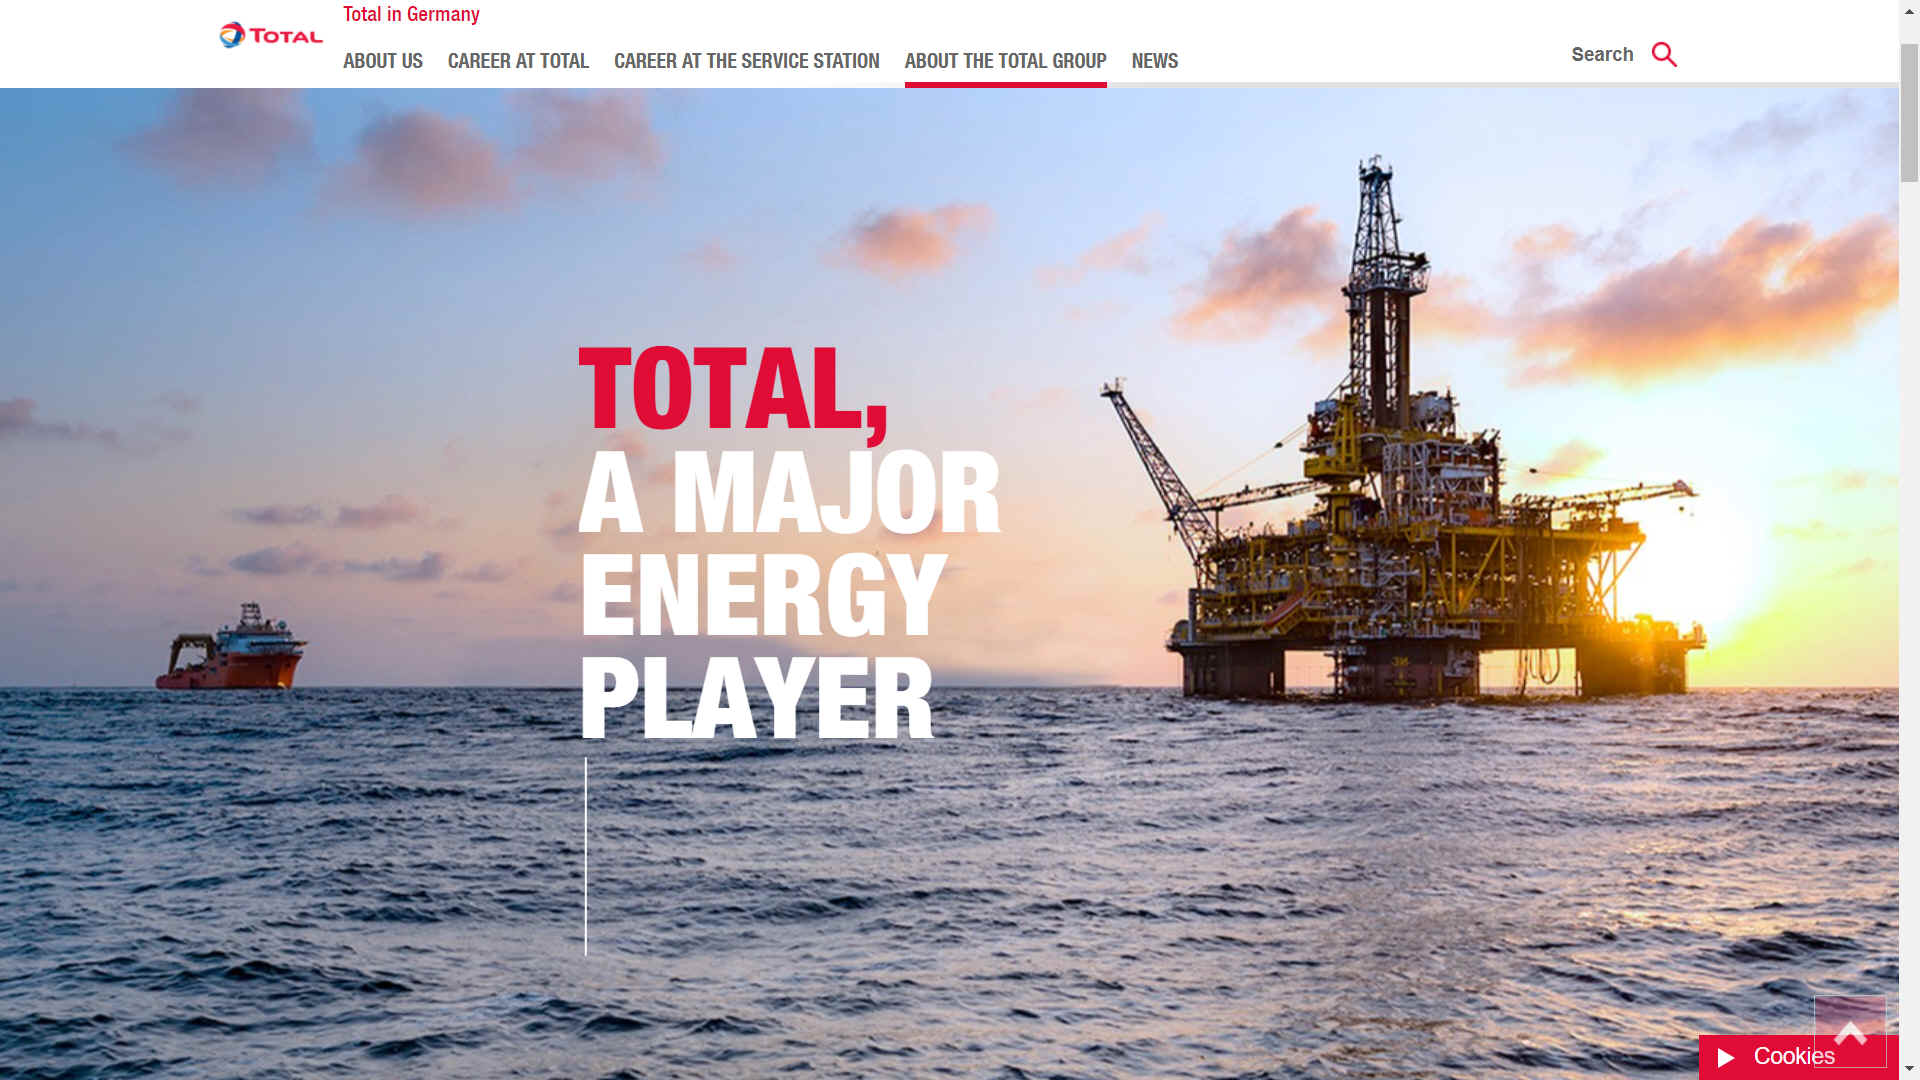 Oil rig at sea, exploration drilling